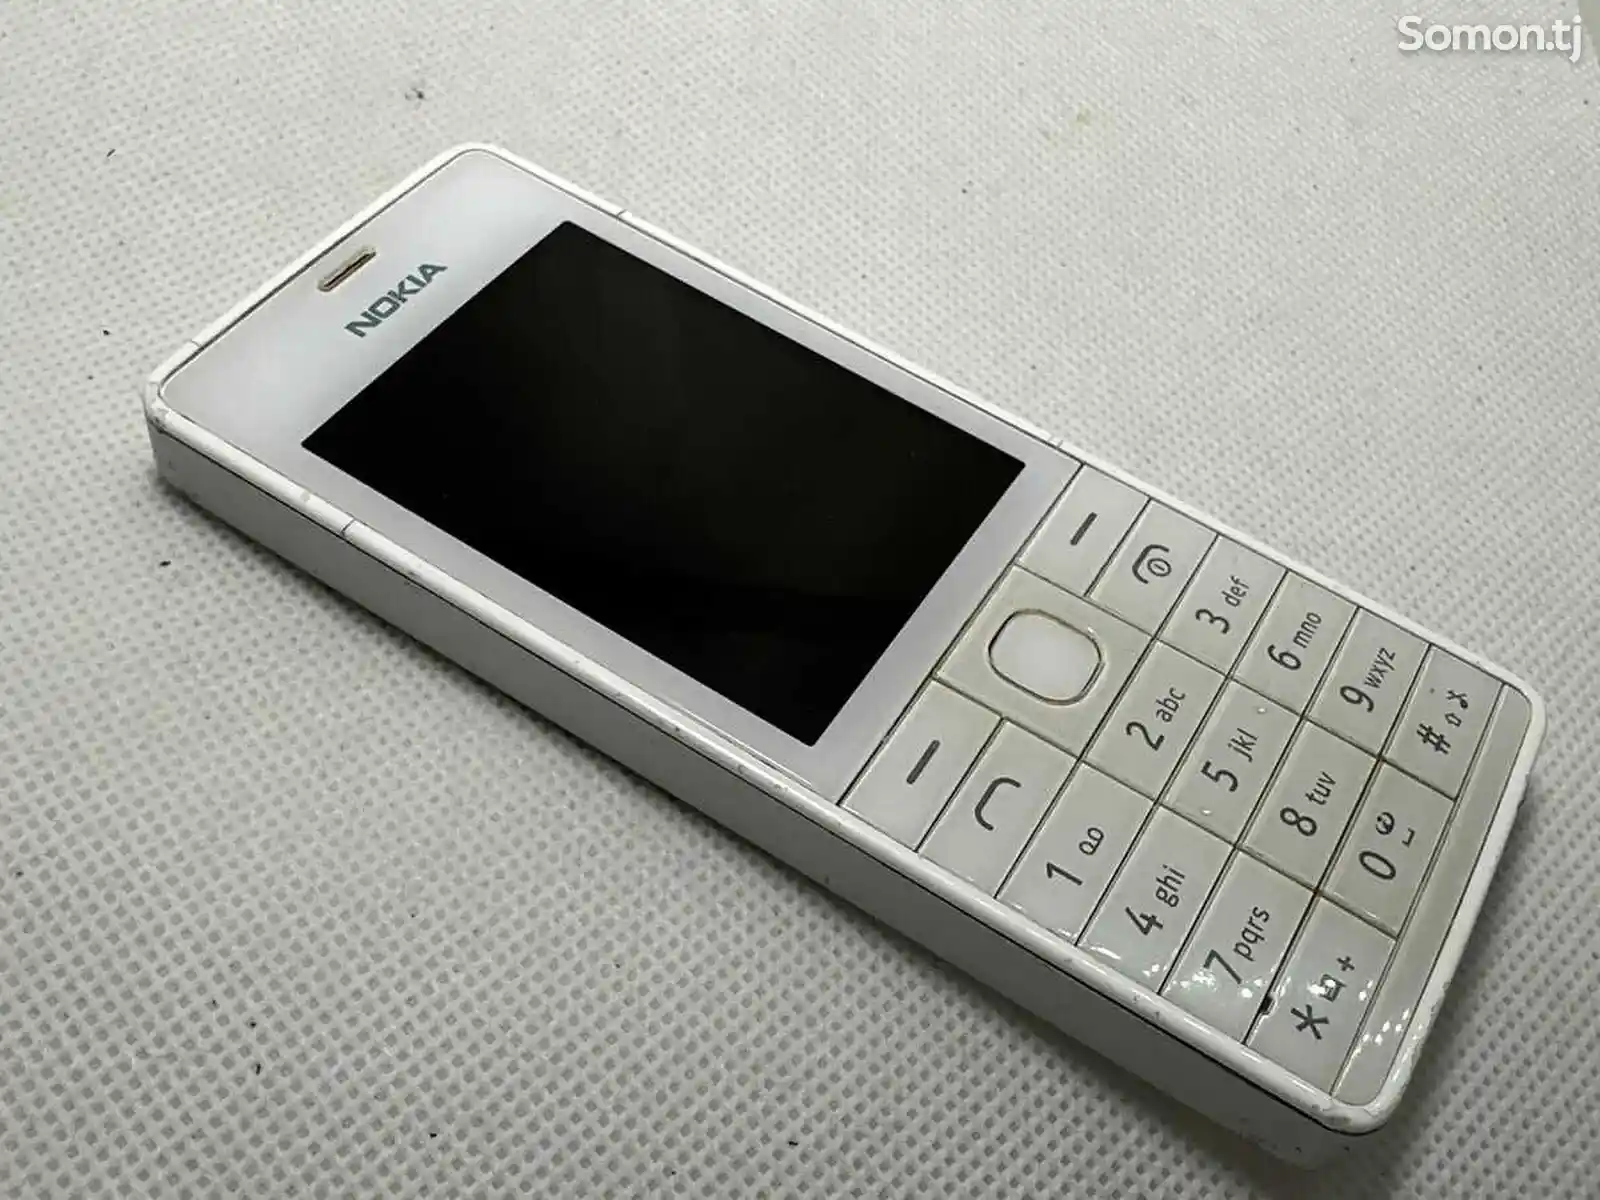 Nokia 515 dual sim